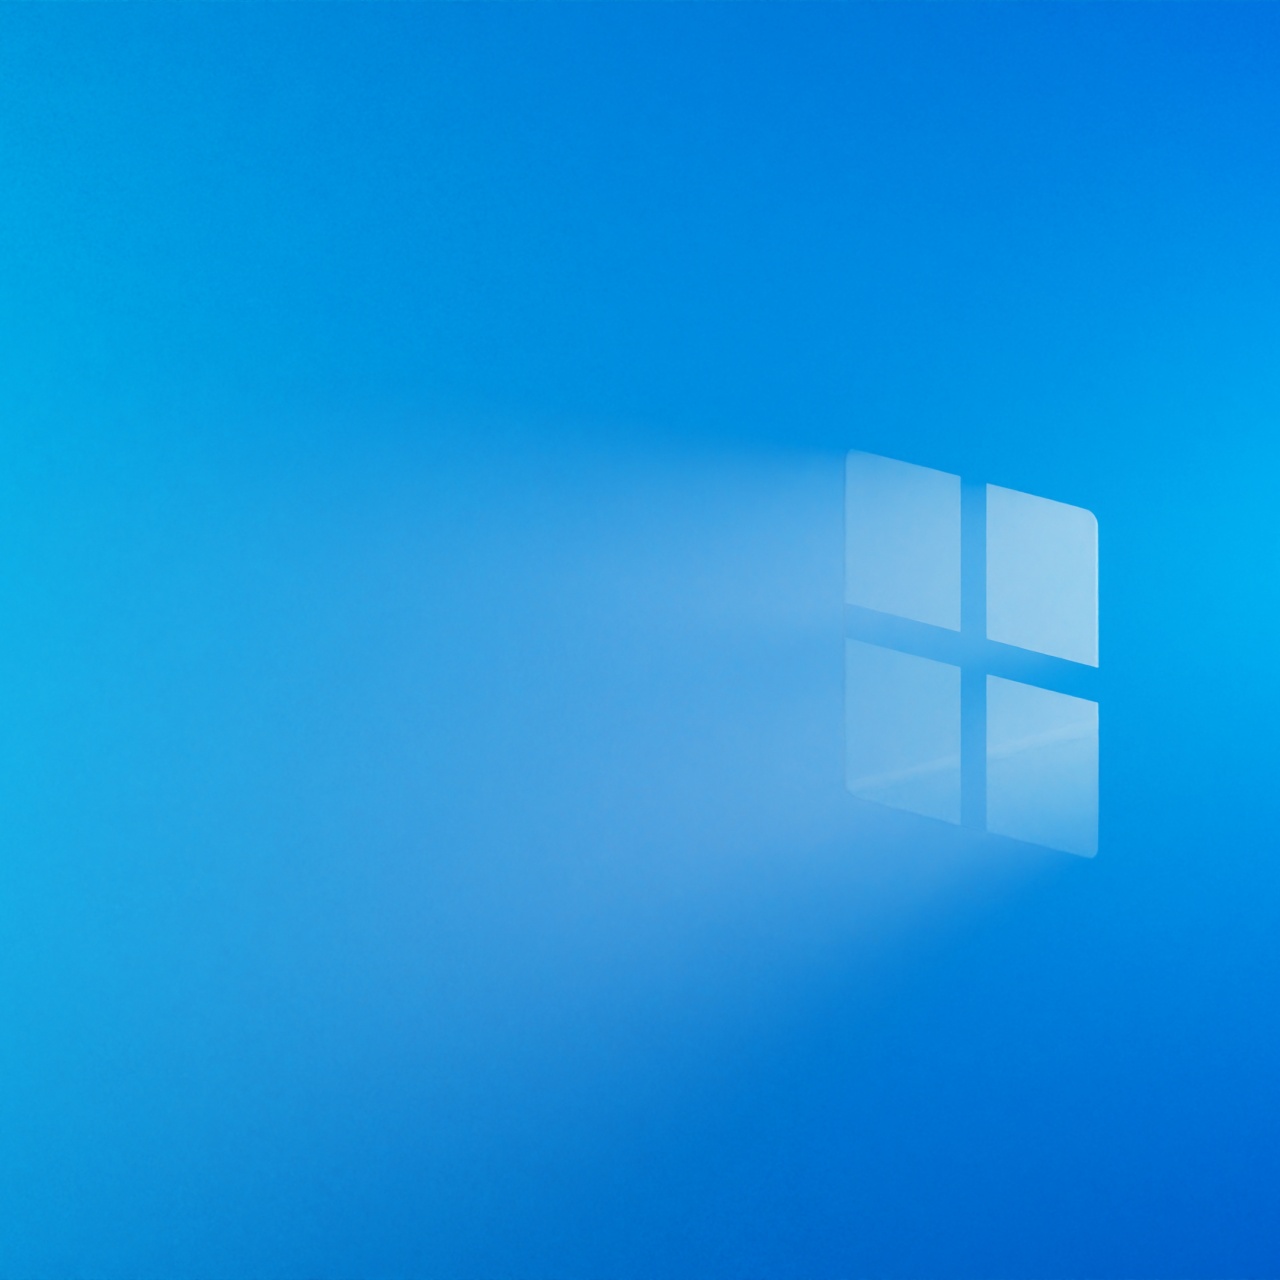 Windows logo Wallpaper 4K, Windows 11, Blue background